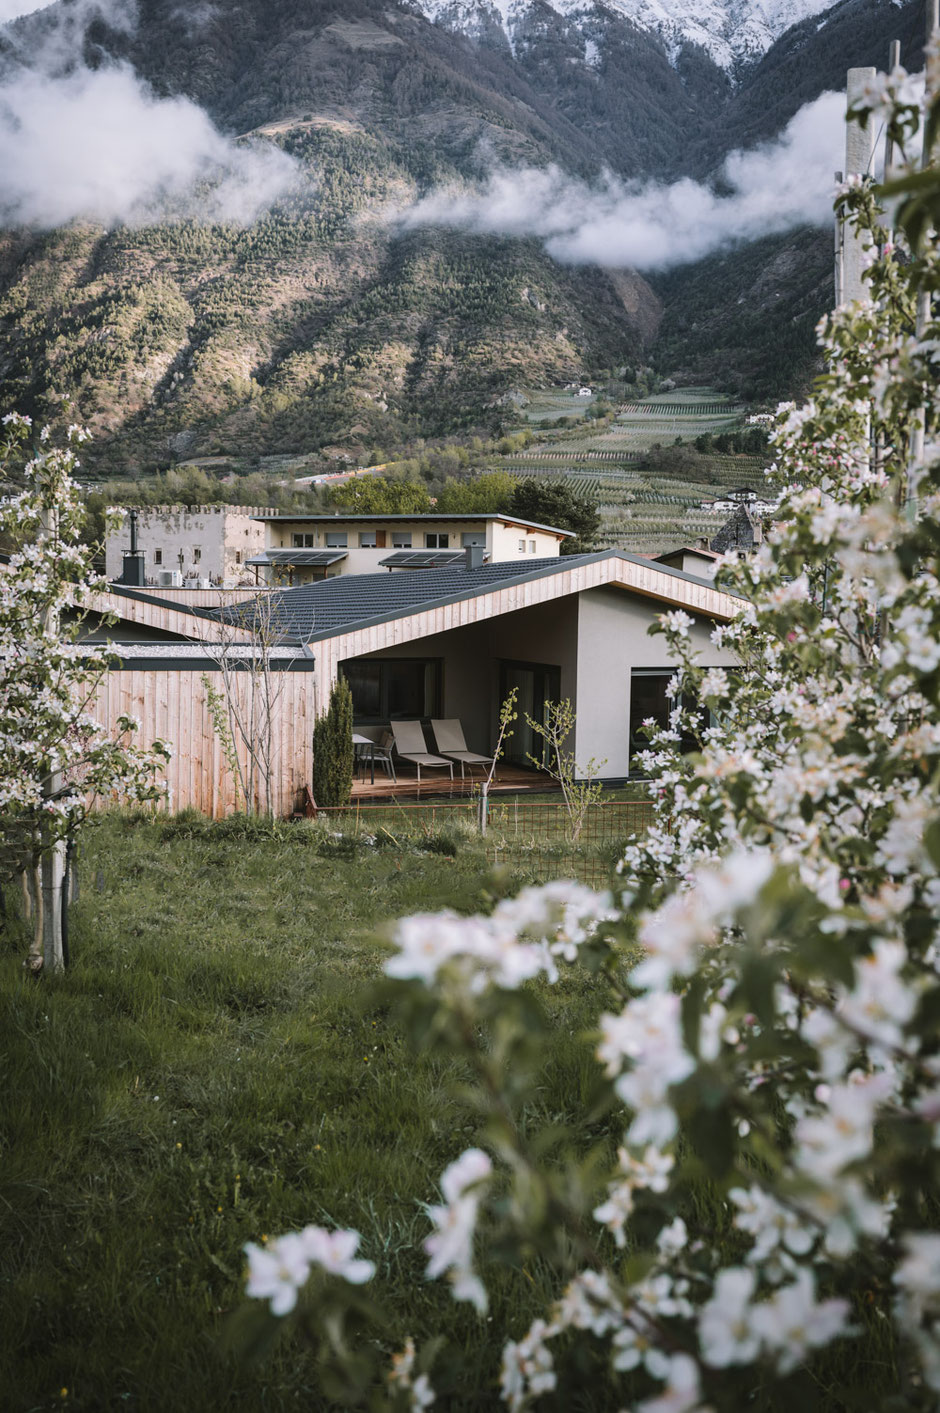 AMOLARIS PRIVATE GARDEN CHALETS, Vinschgau - Südtirol #mountainhideaways ©Marika Unterladstätter